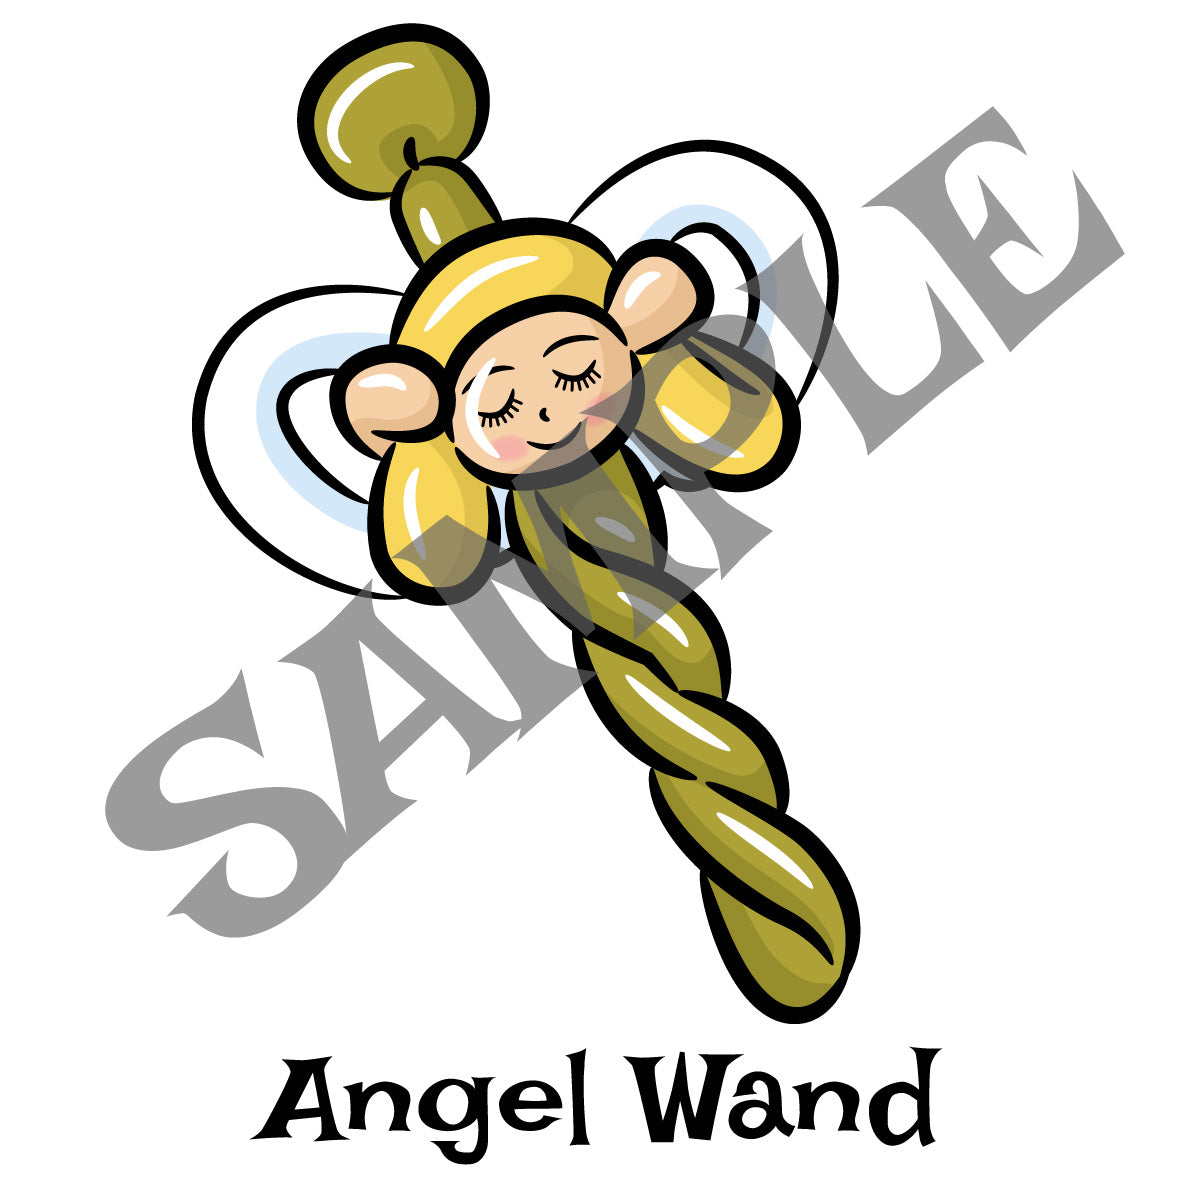 Angel Wand